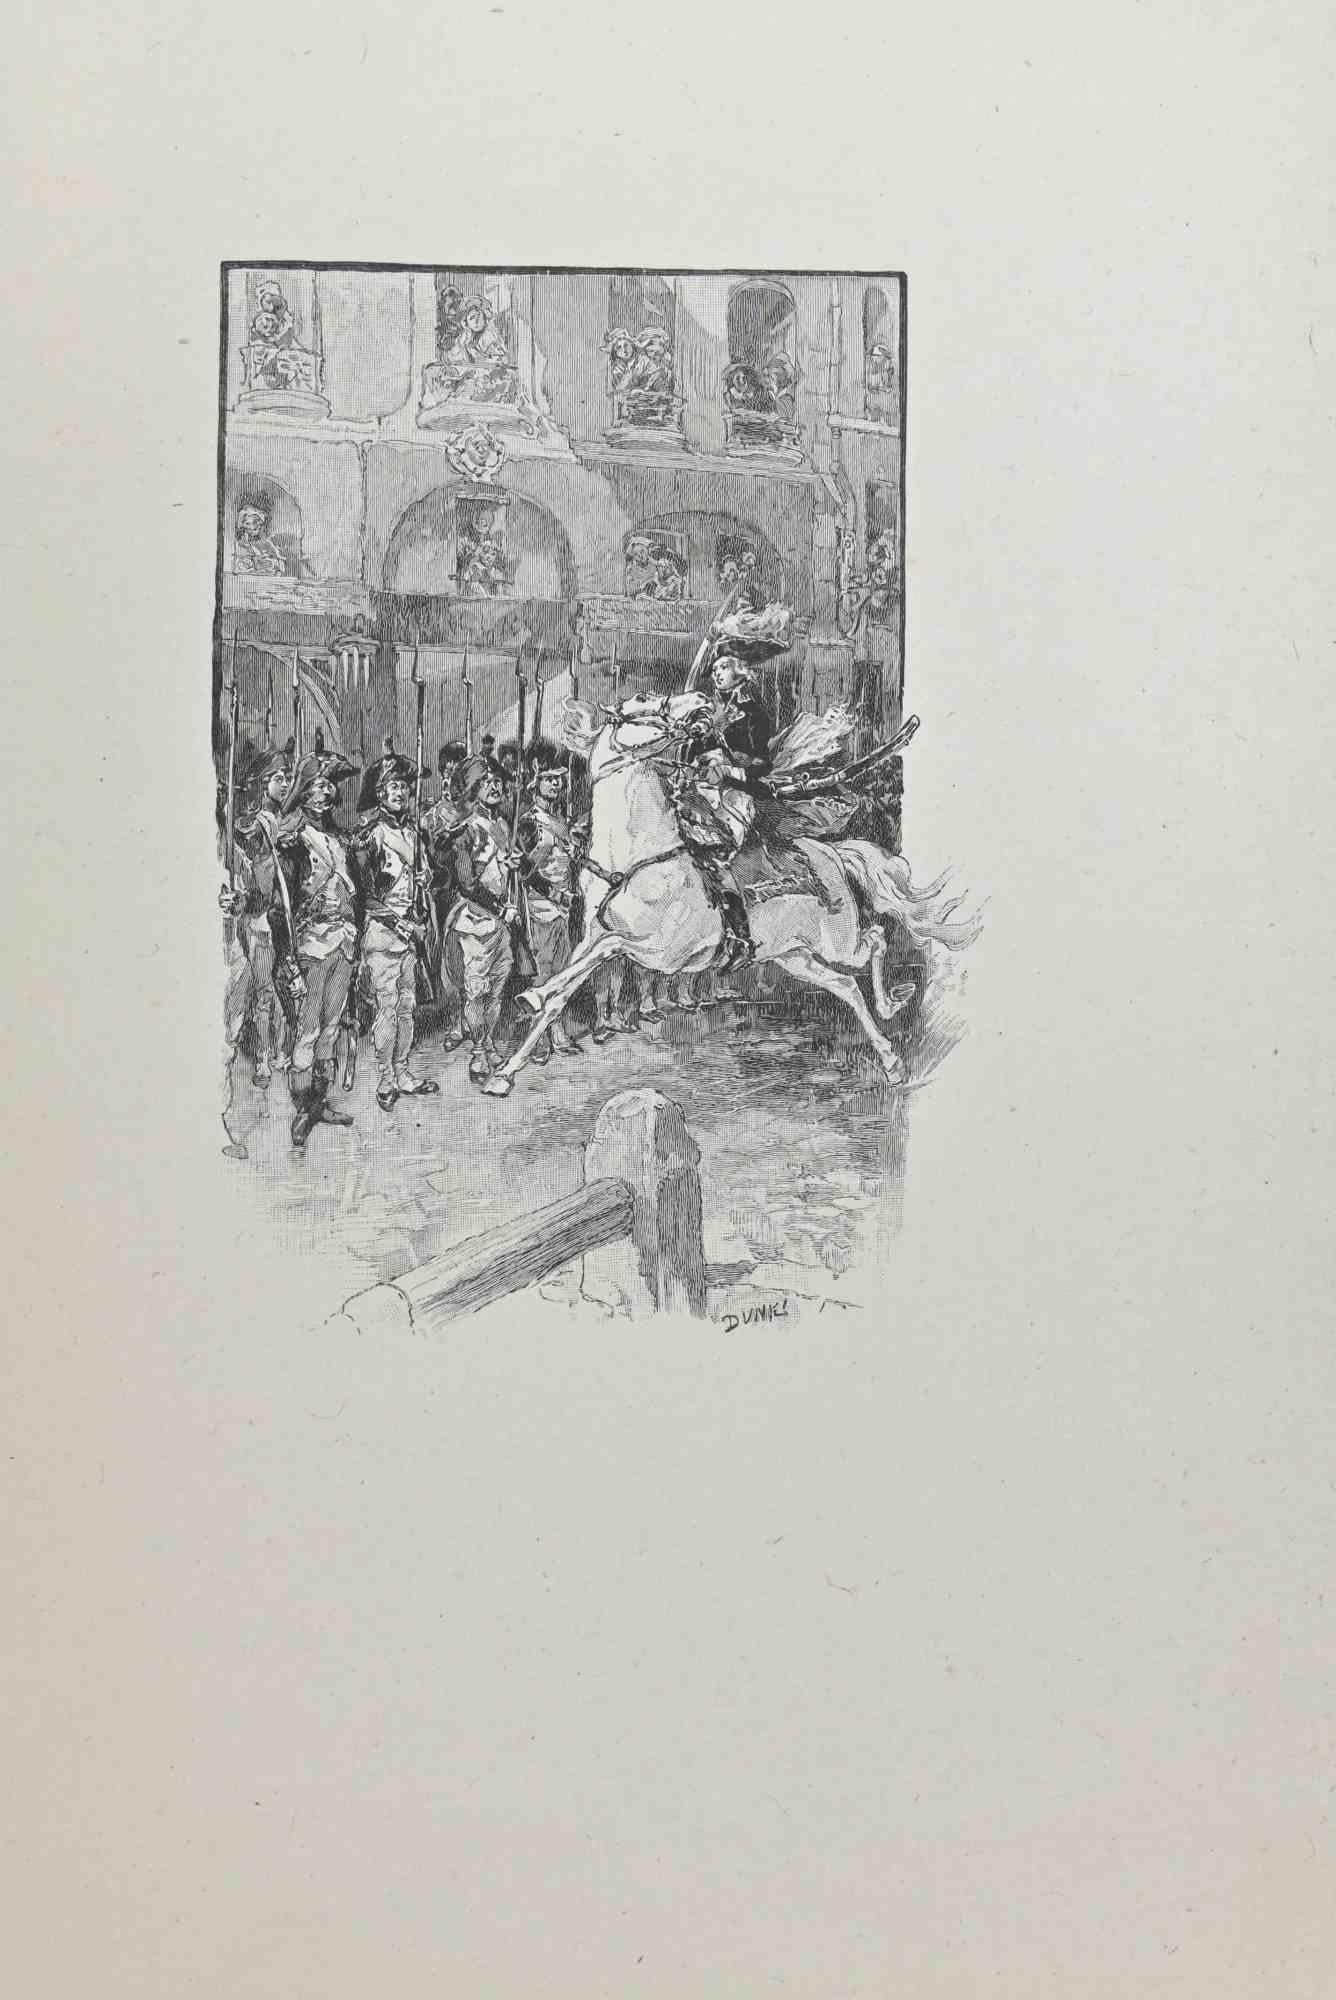 Arrival of General - Lithograph by Hégésippe Moreau - 1838